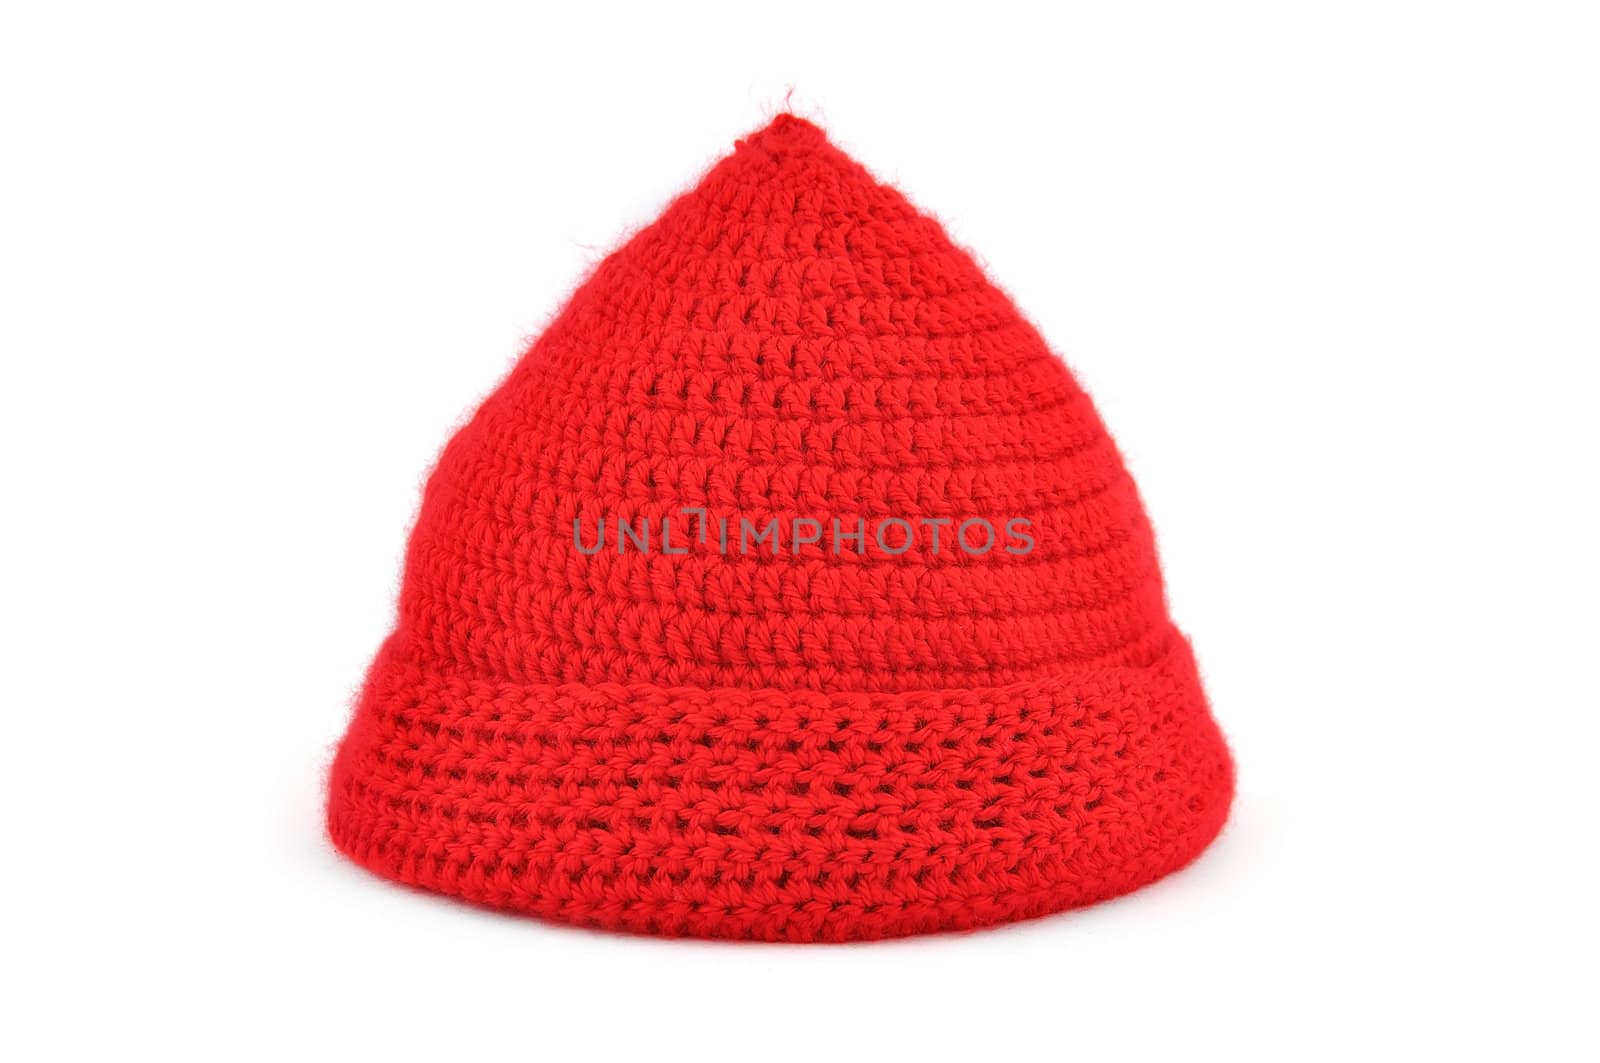 woolen cap by vetkit